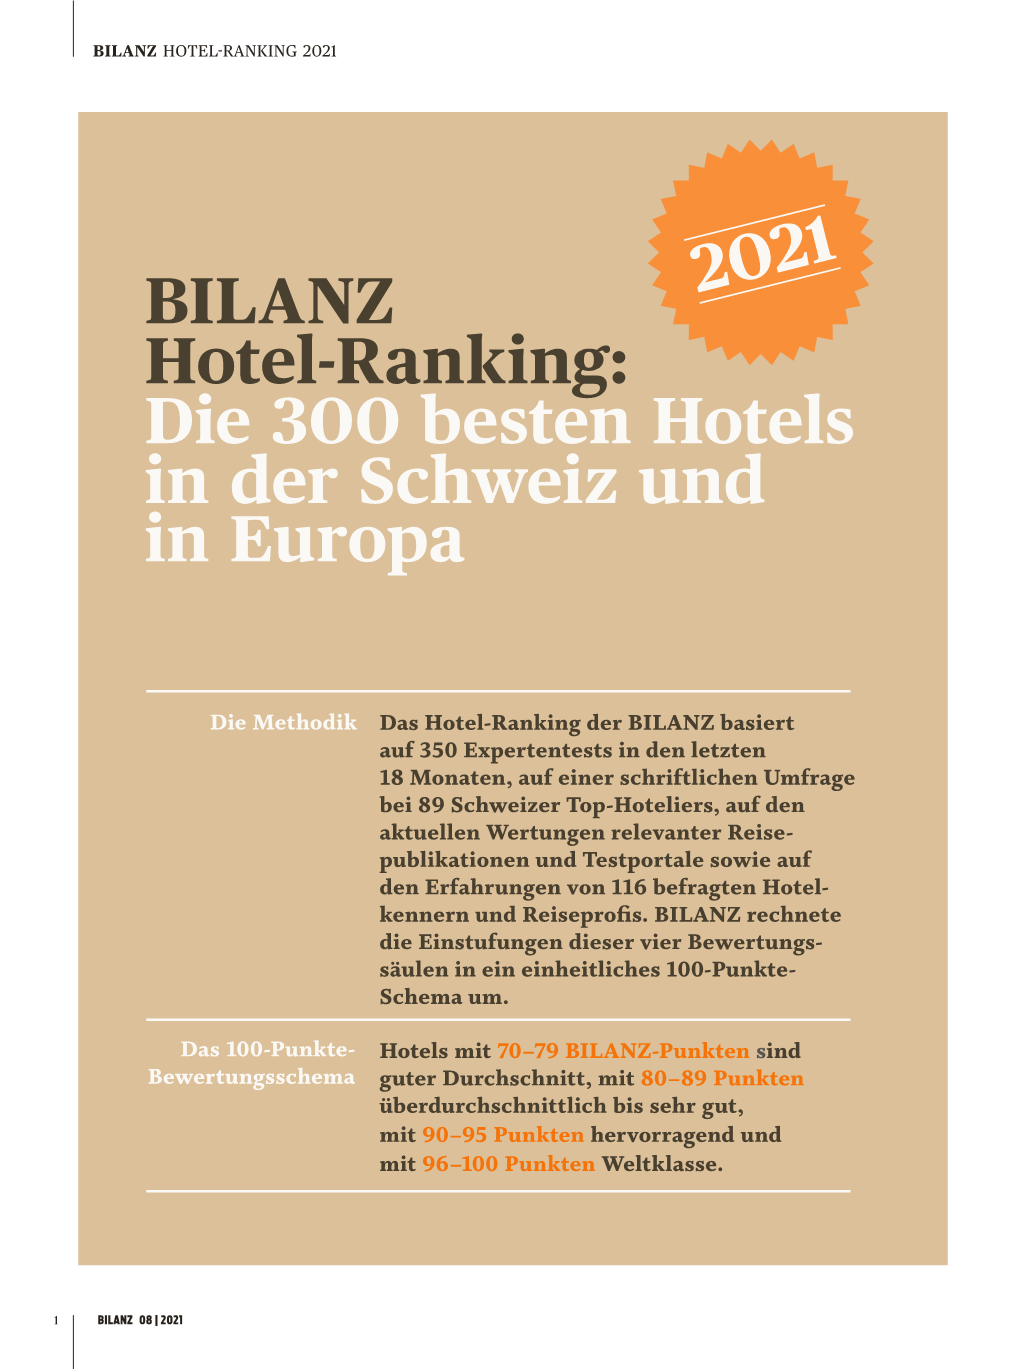 Bilanz Hotel-Ranking 2021